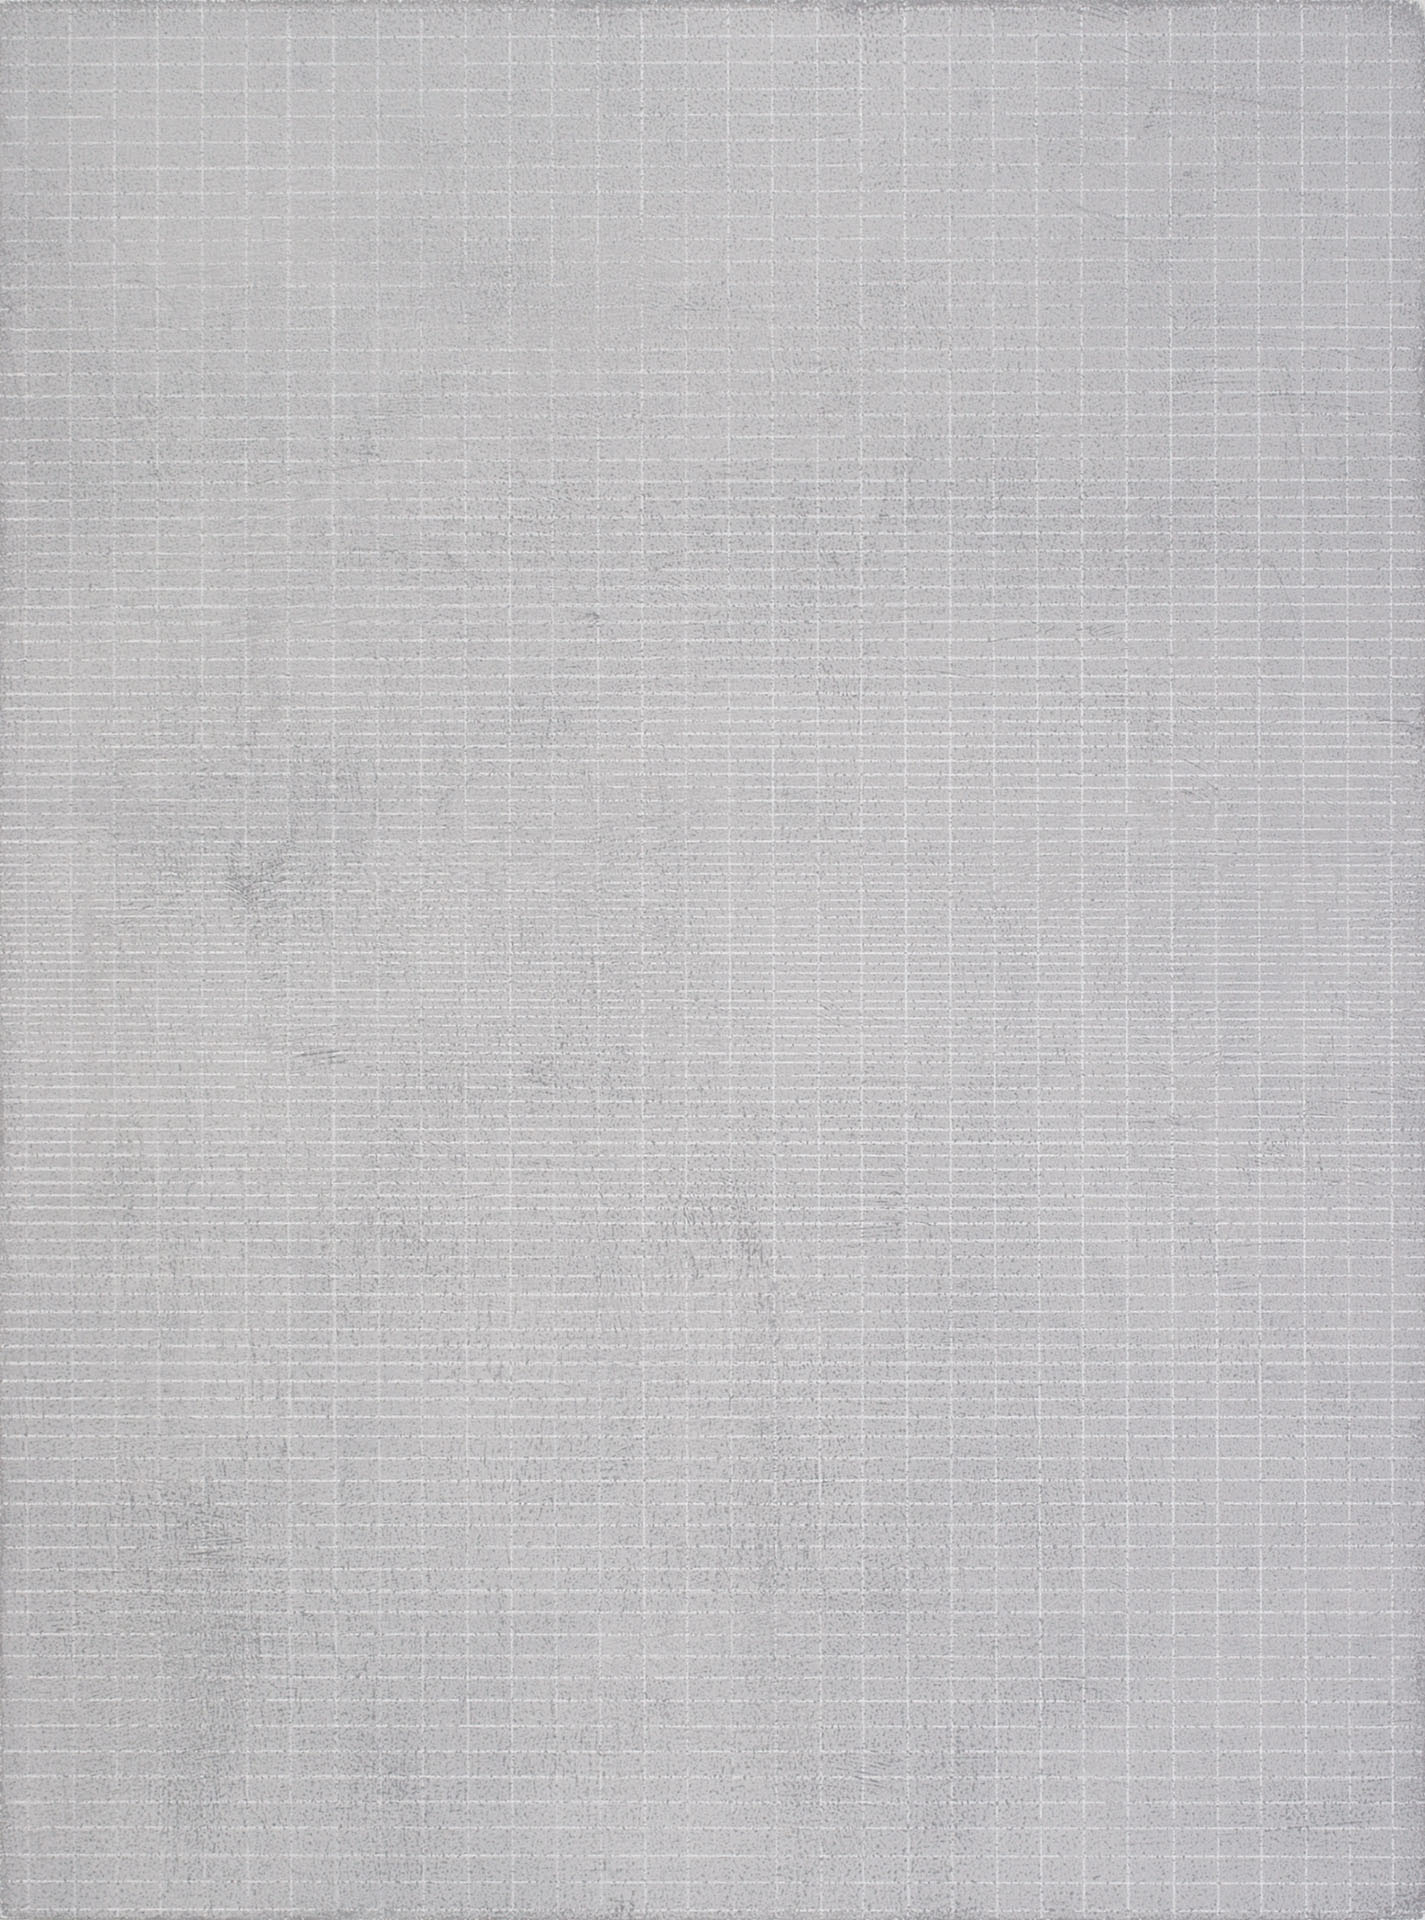  Grid 26, 2014, acrylic on aluminium, 435 x 325mm 